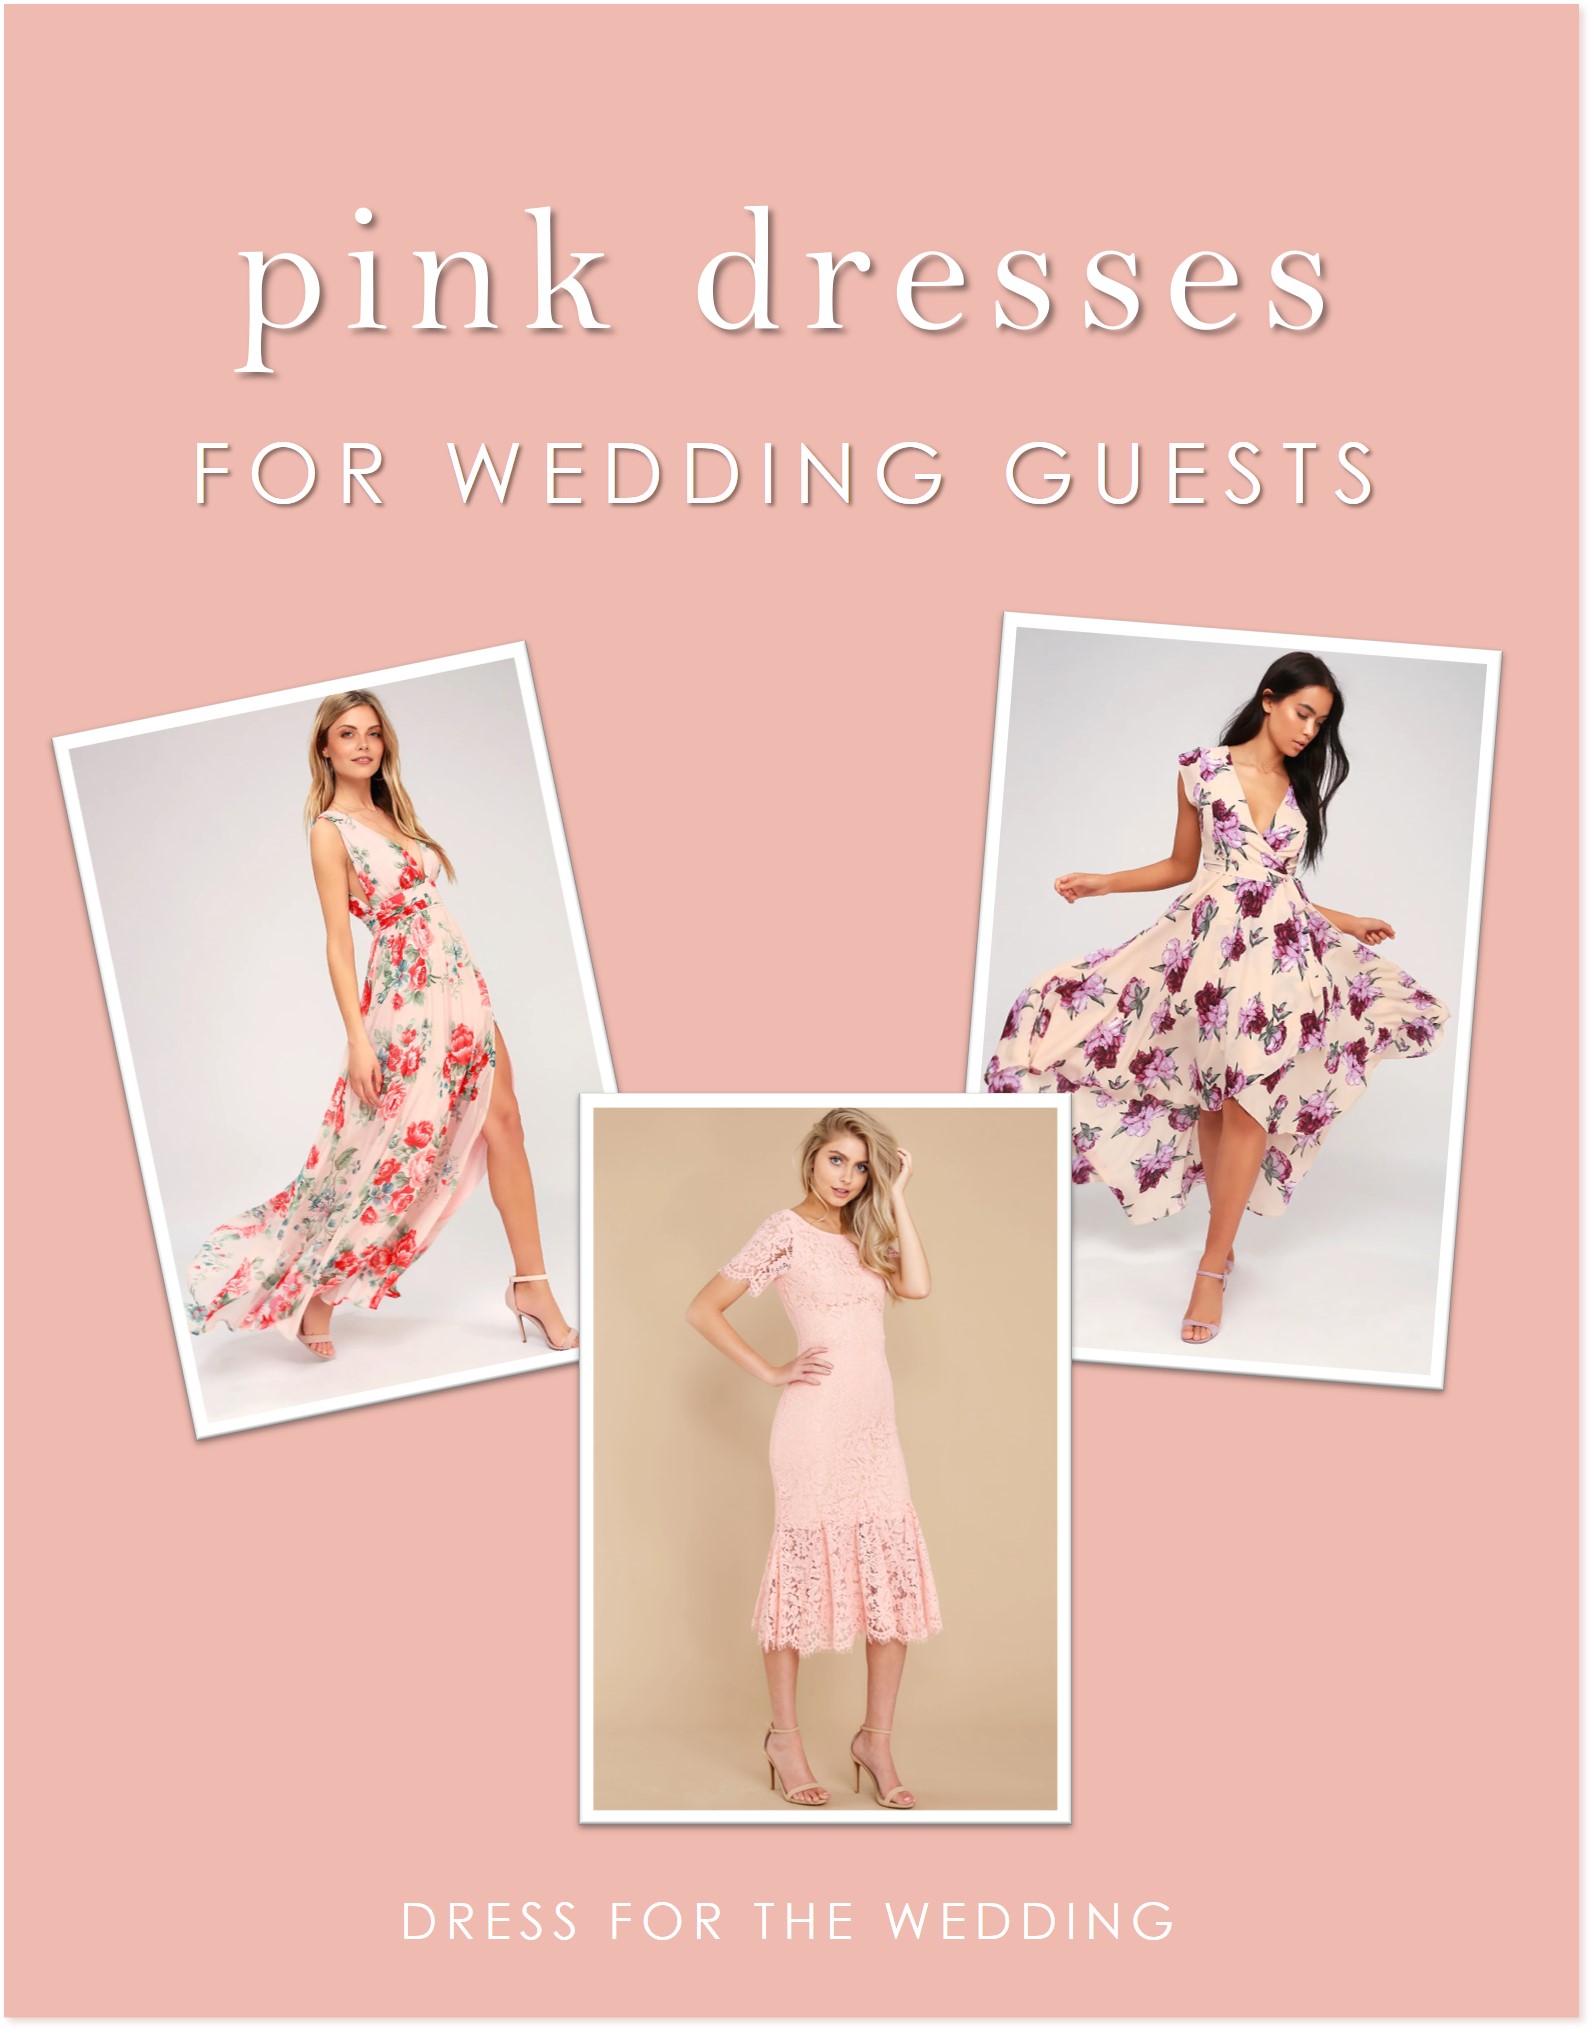 Pink Dresses for Wedding Guests - Dress ...